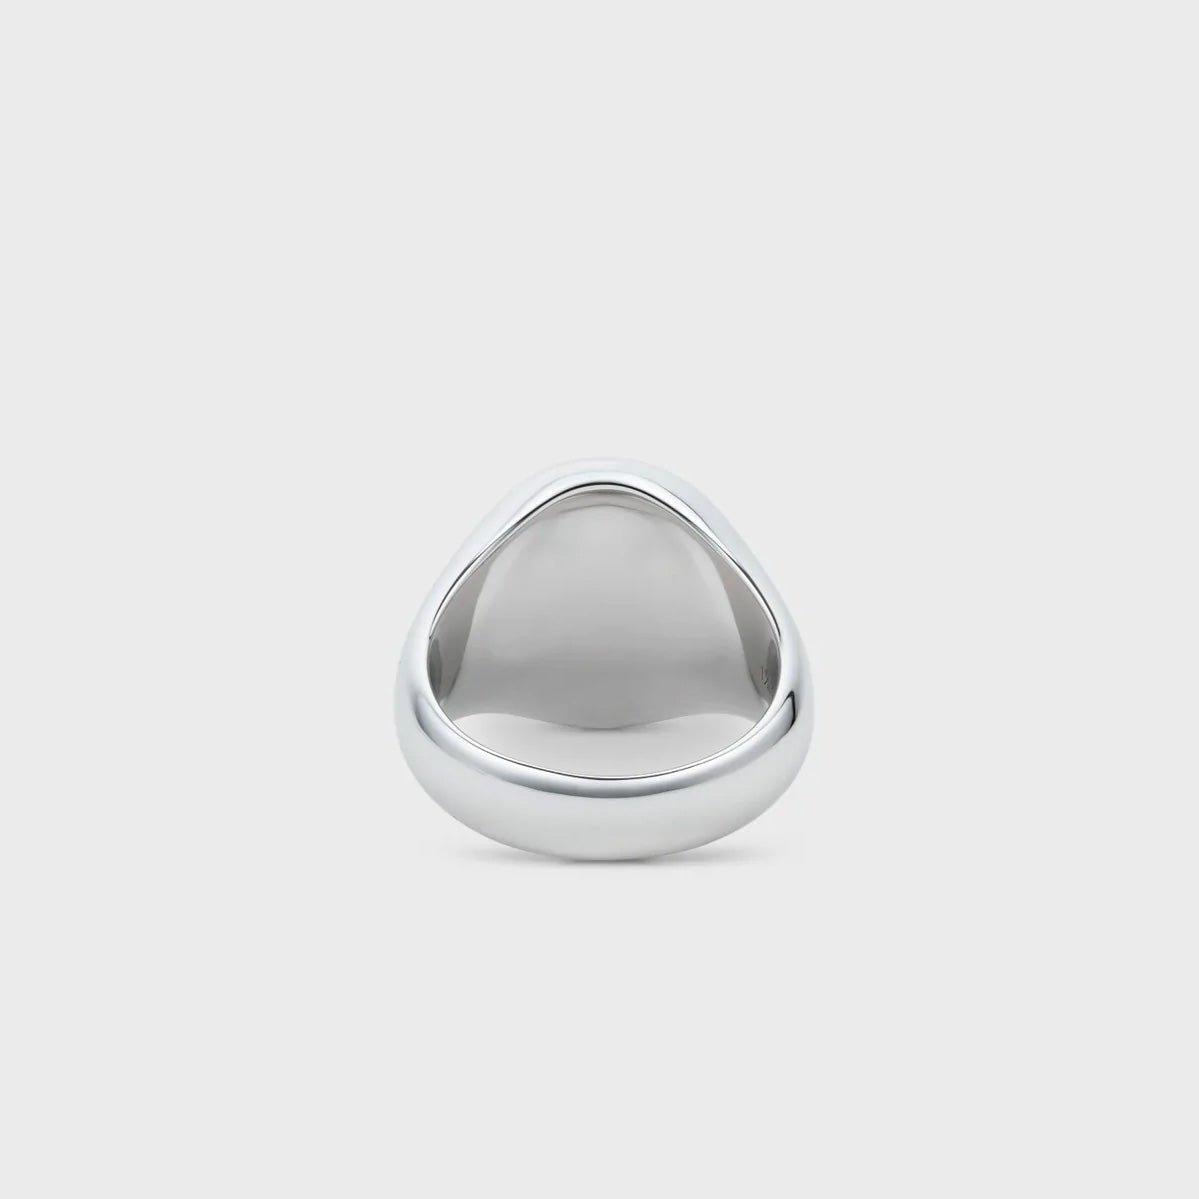 IX oval silver ring hawks eye - IX STUDIOS - Kul og Koks